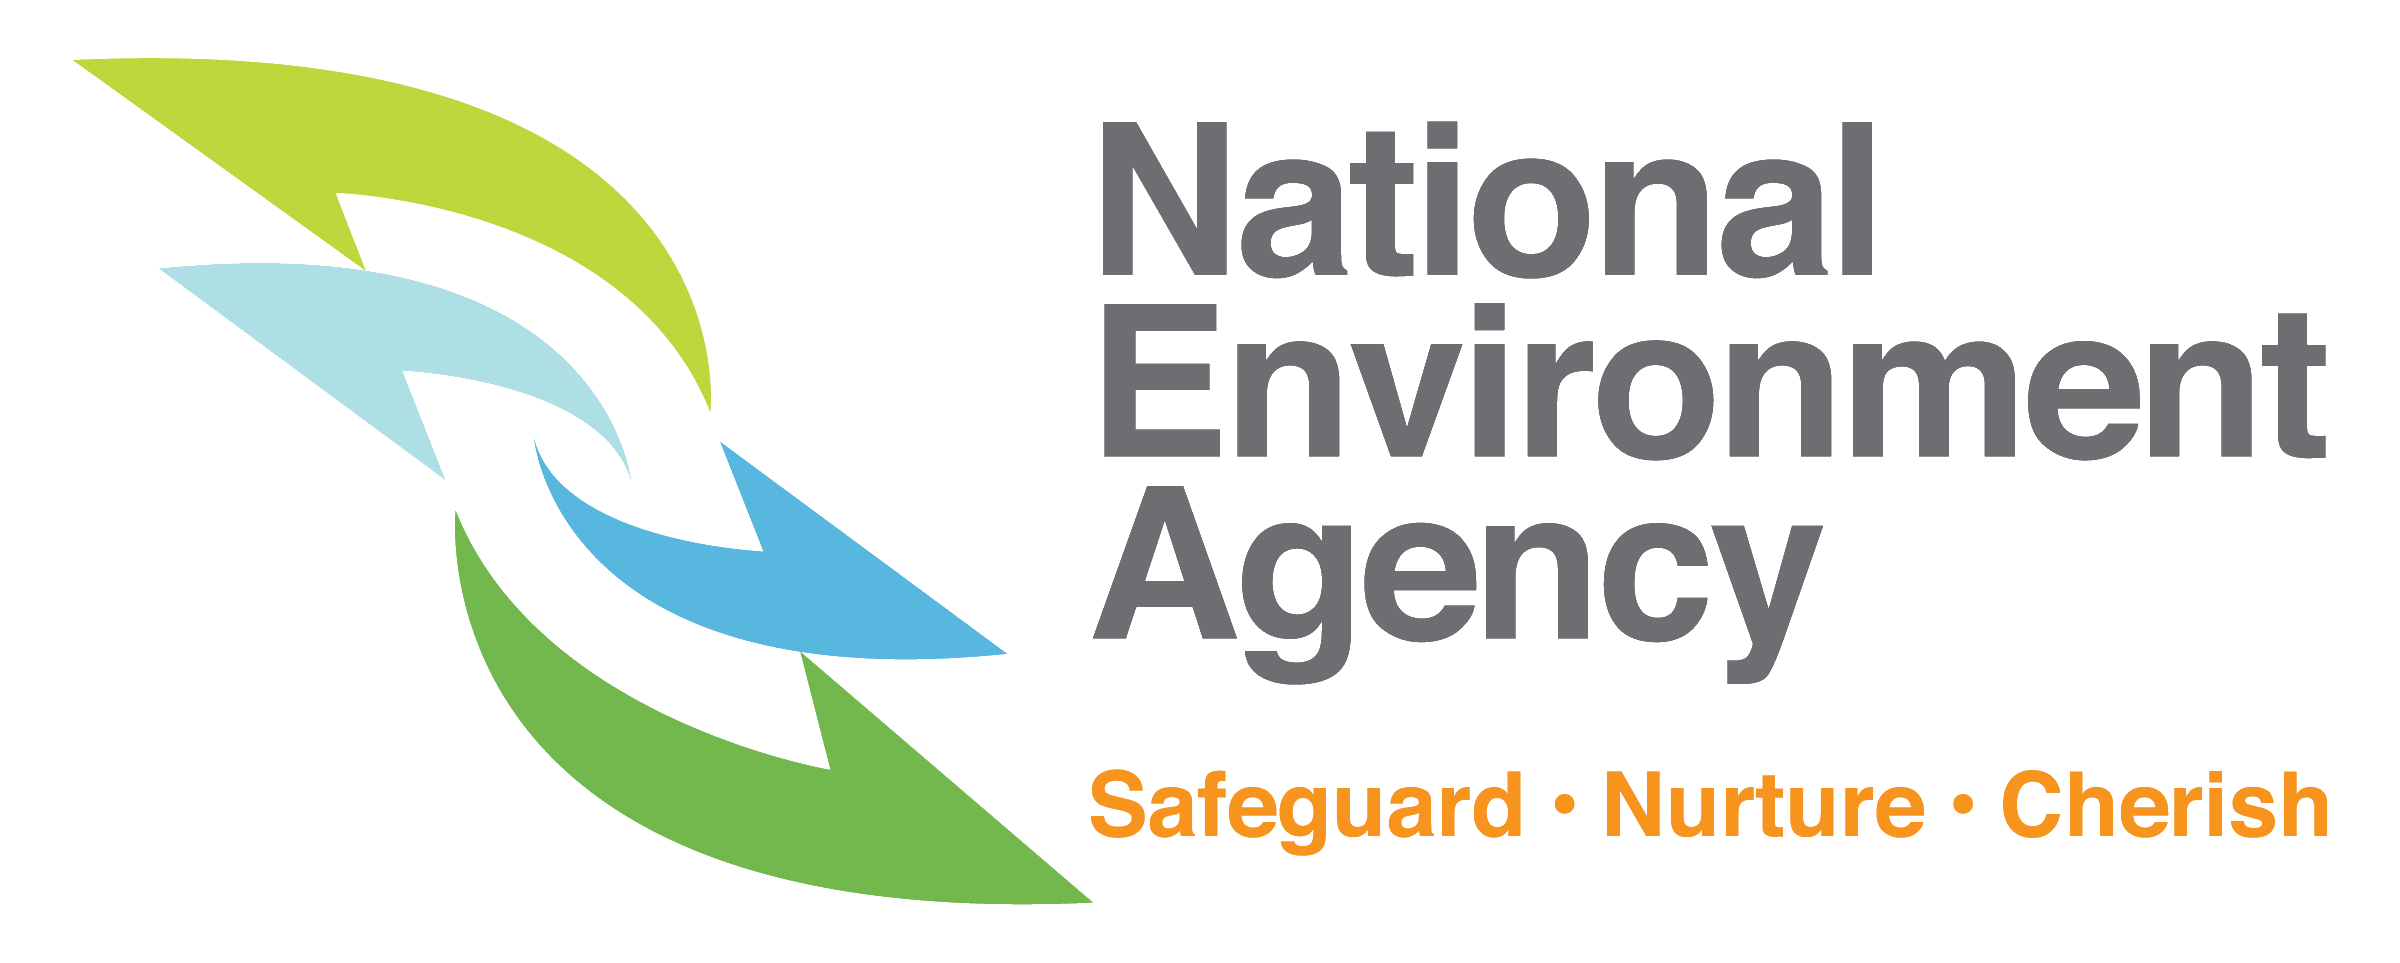 National Environment Agency Logo